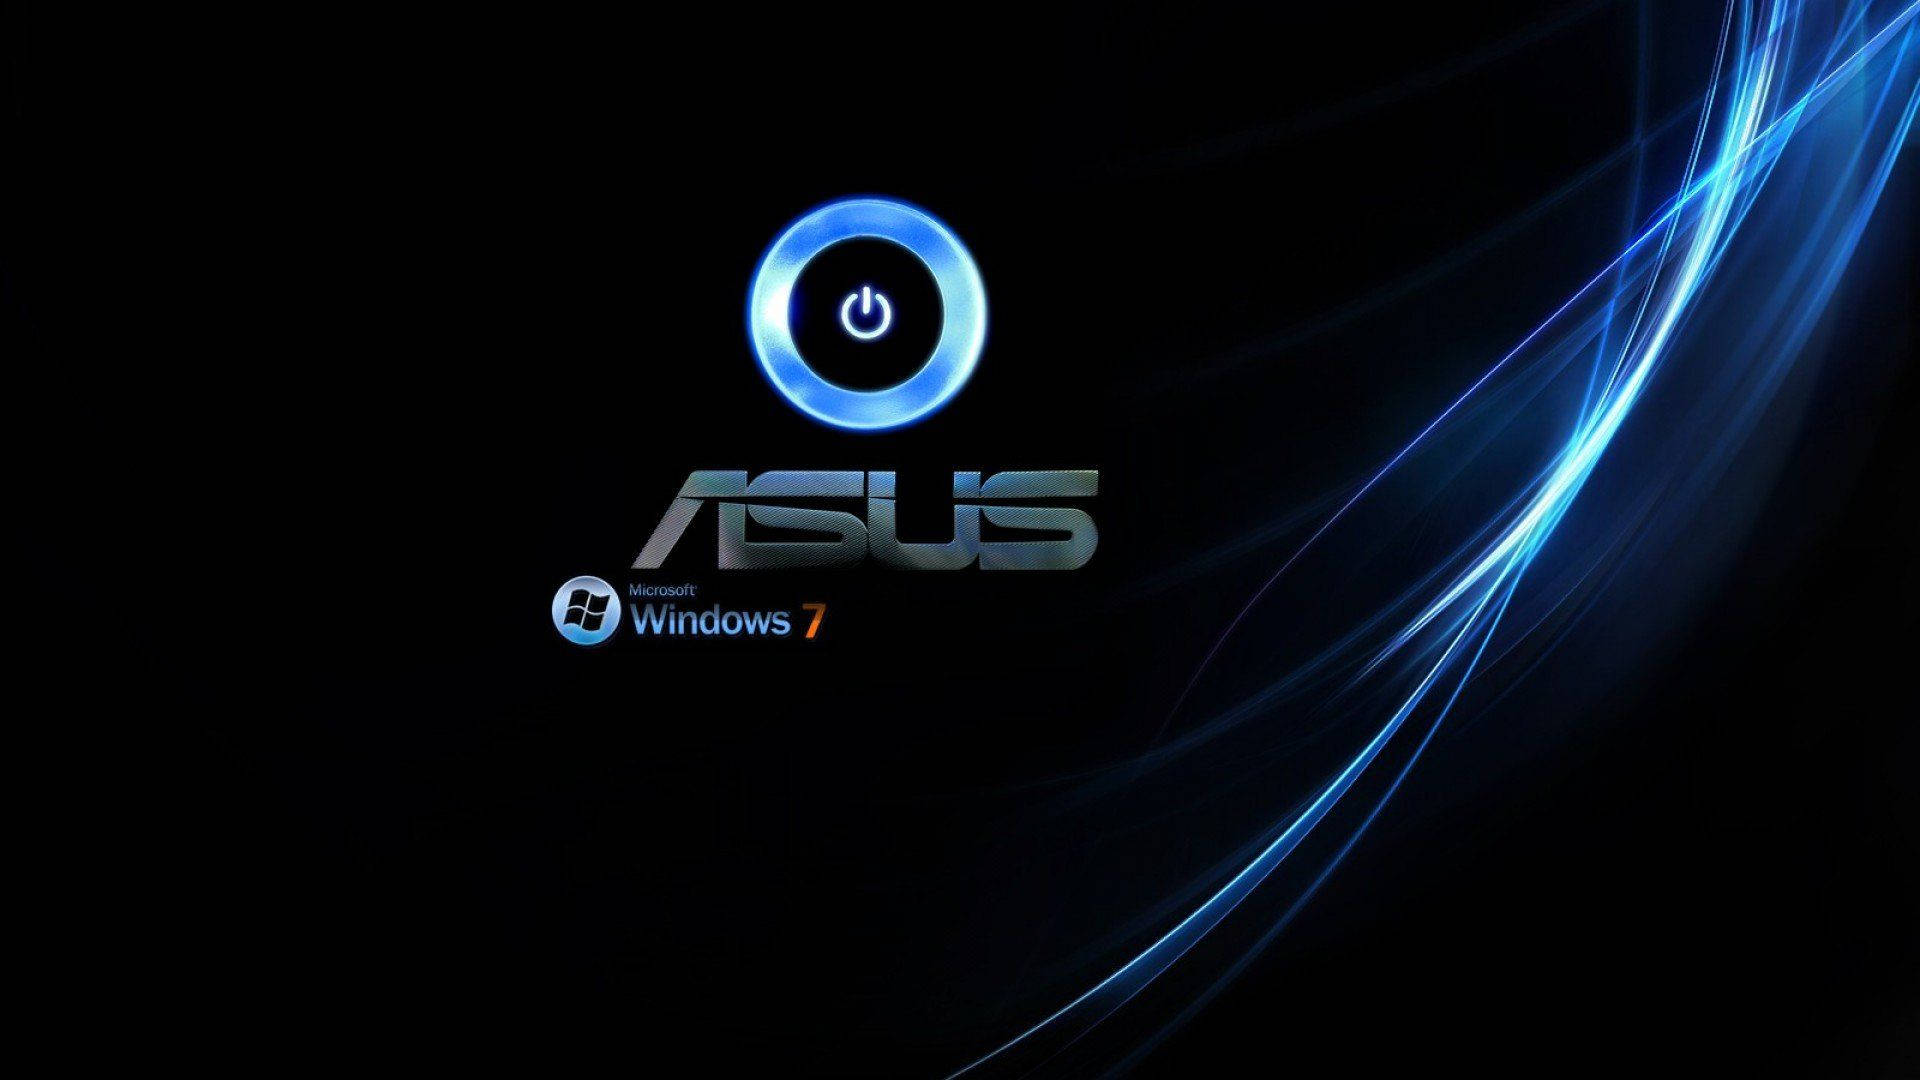 Asus Windows 7 Blue Picture